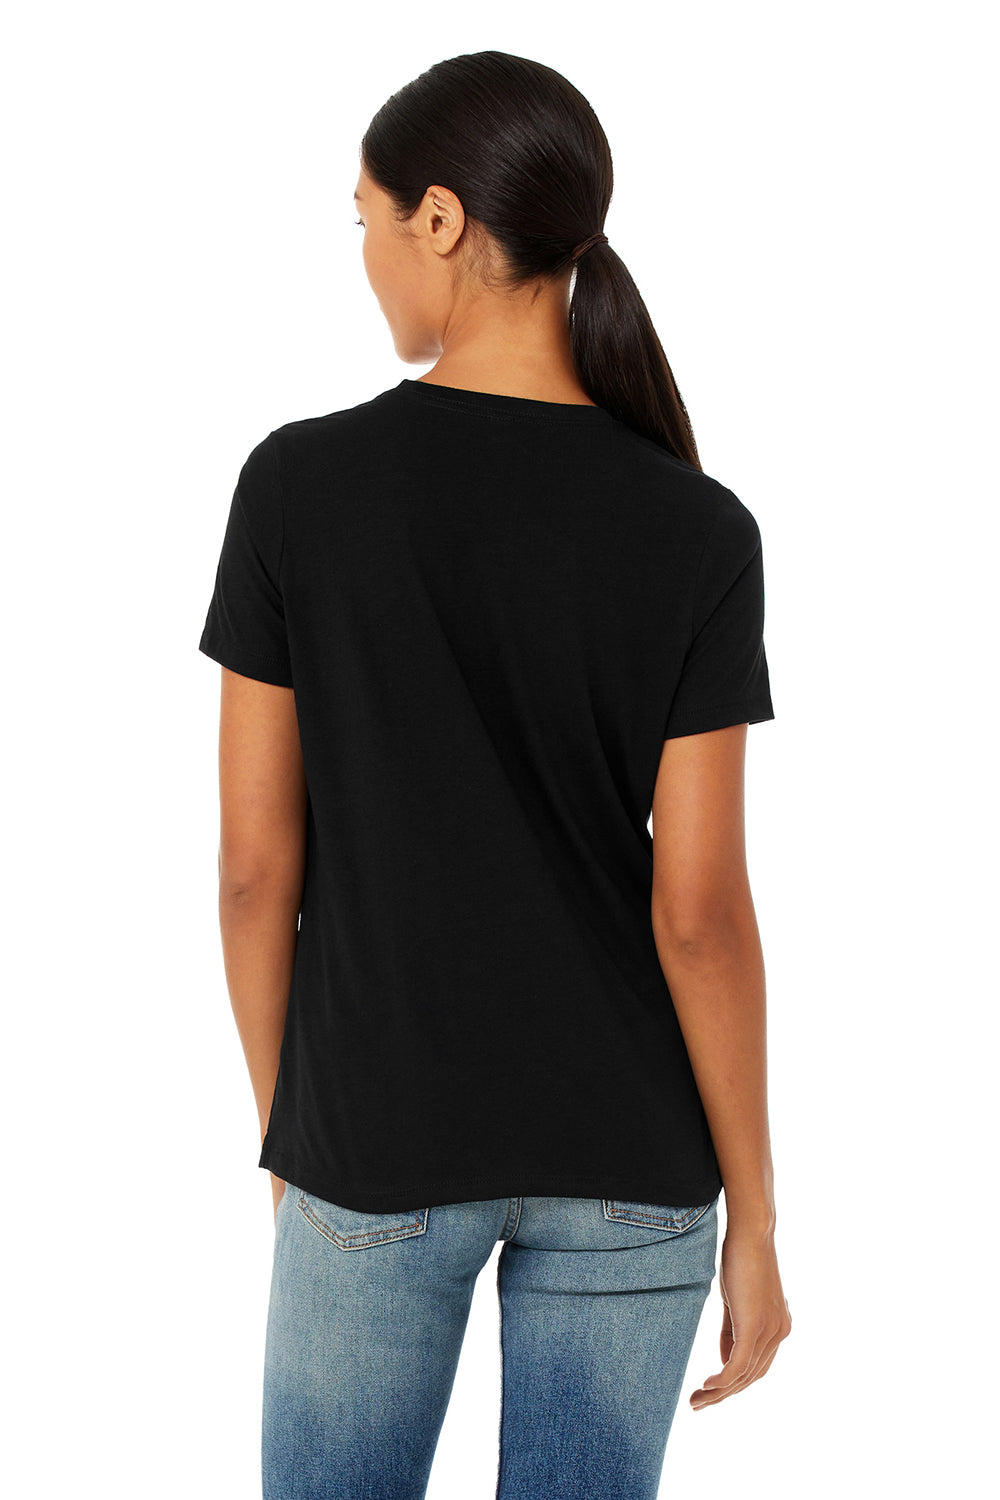 Bella + Canvas BC6413 Womens Short Sleeve Crewneck T-Shirt Solid Black Model Back